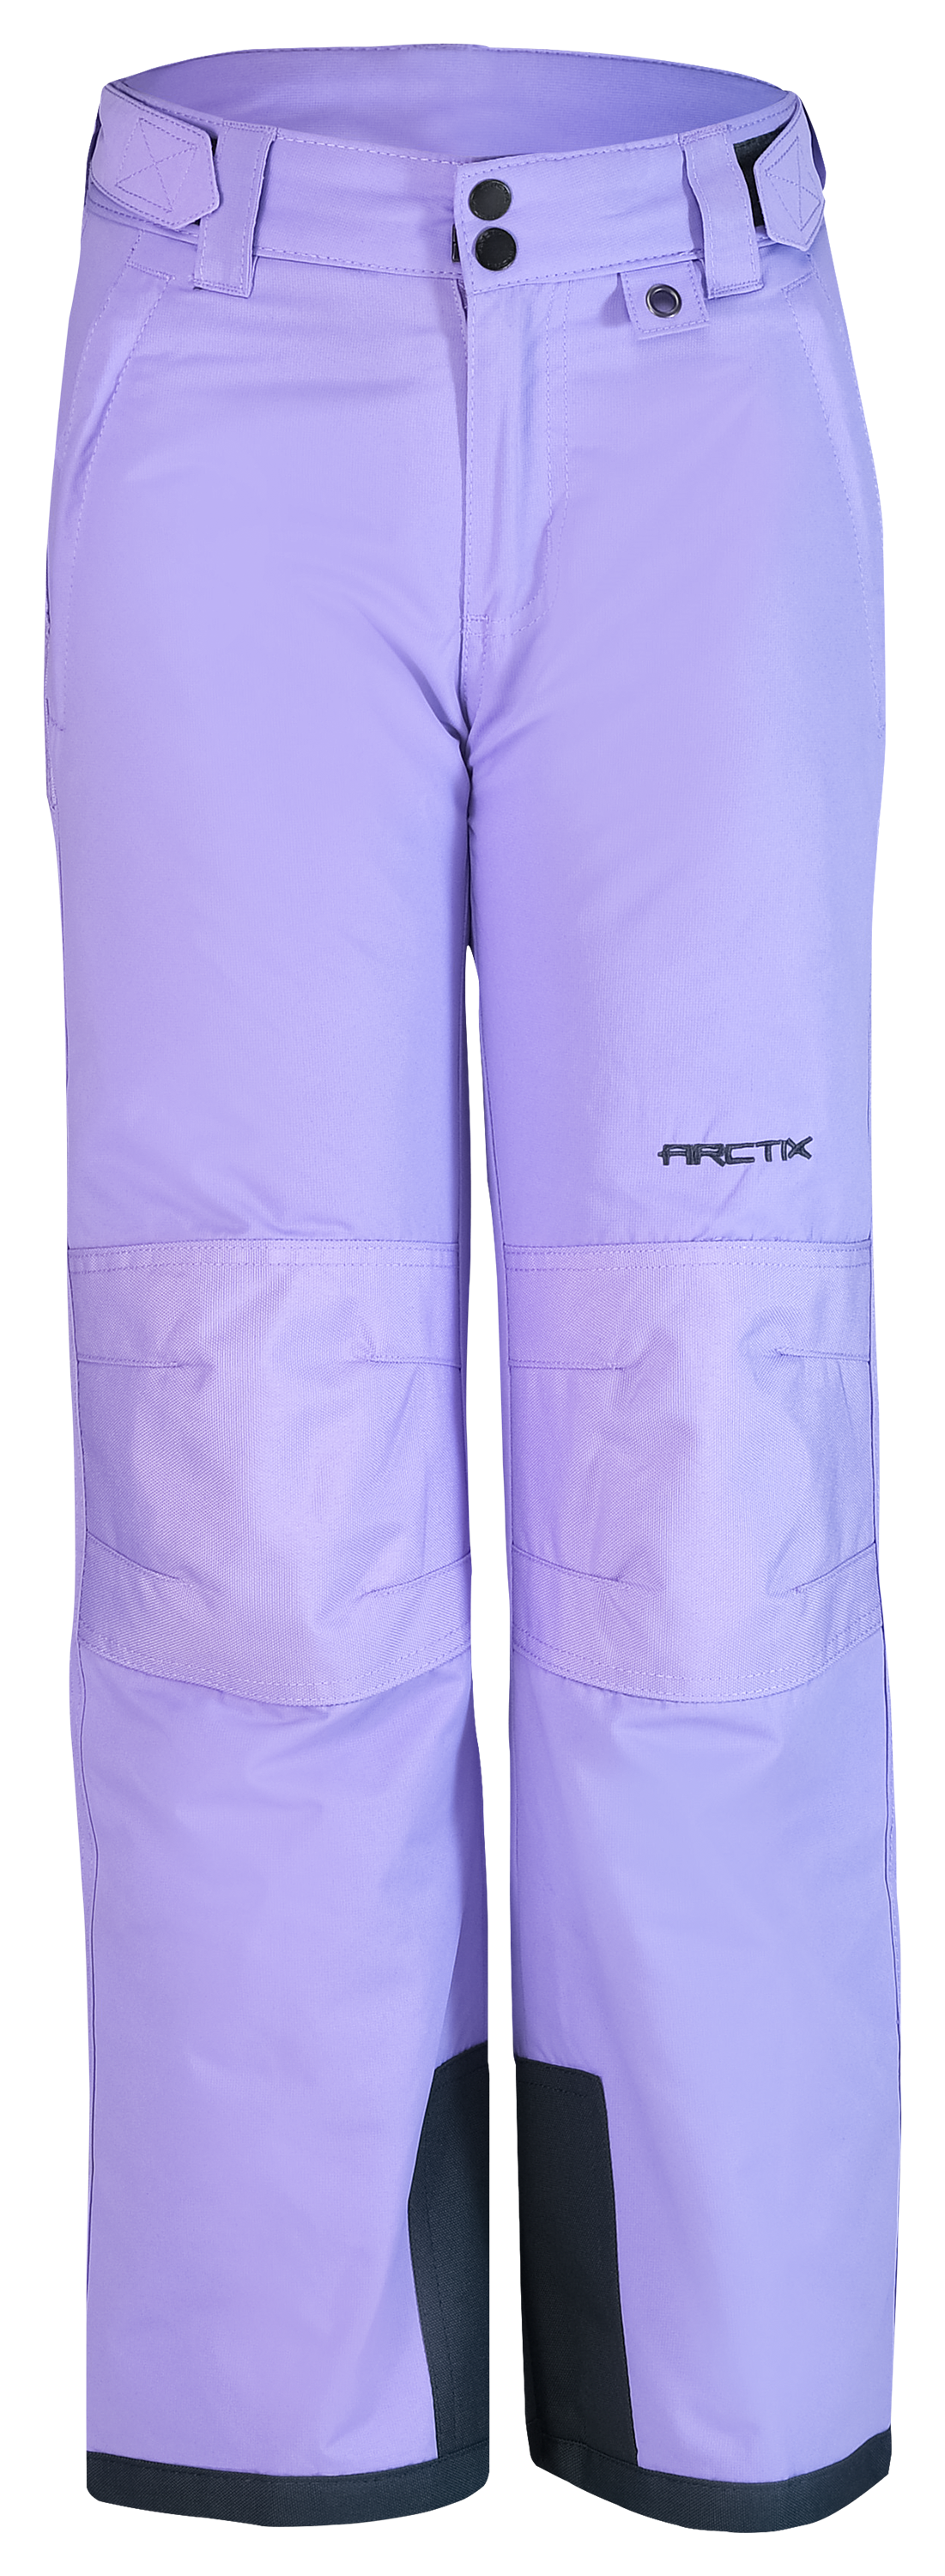 Arctix Reinforced Snow Pants for Kids